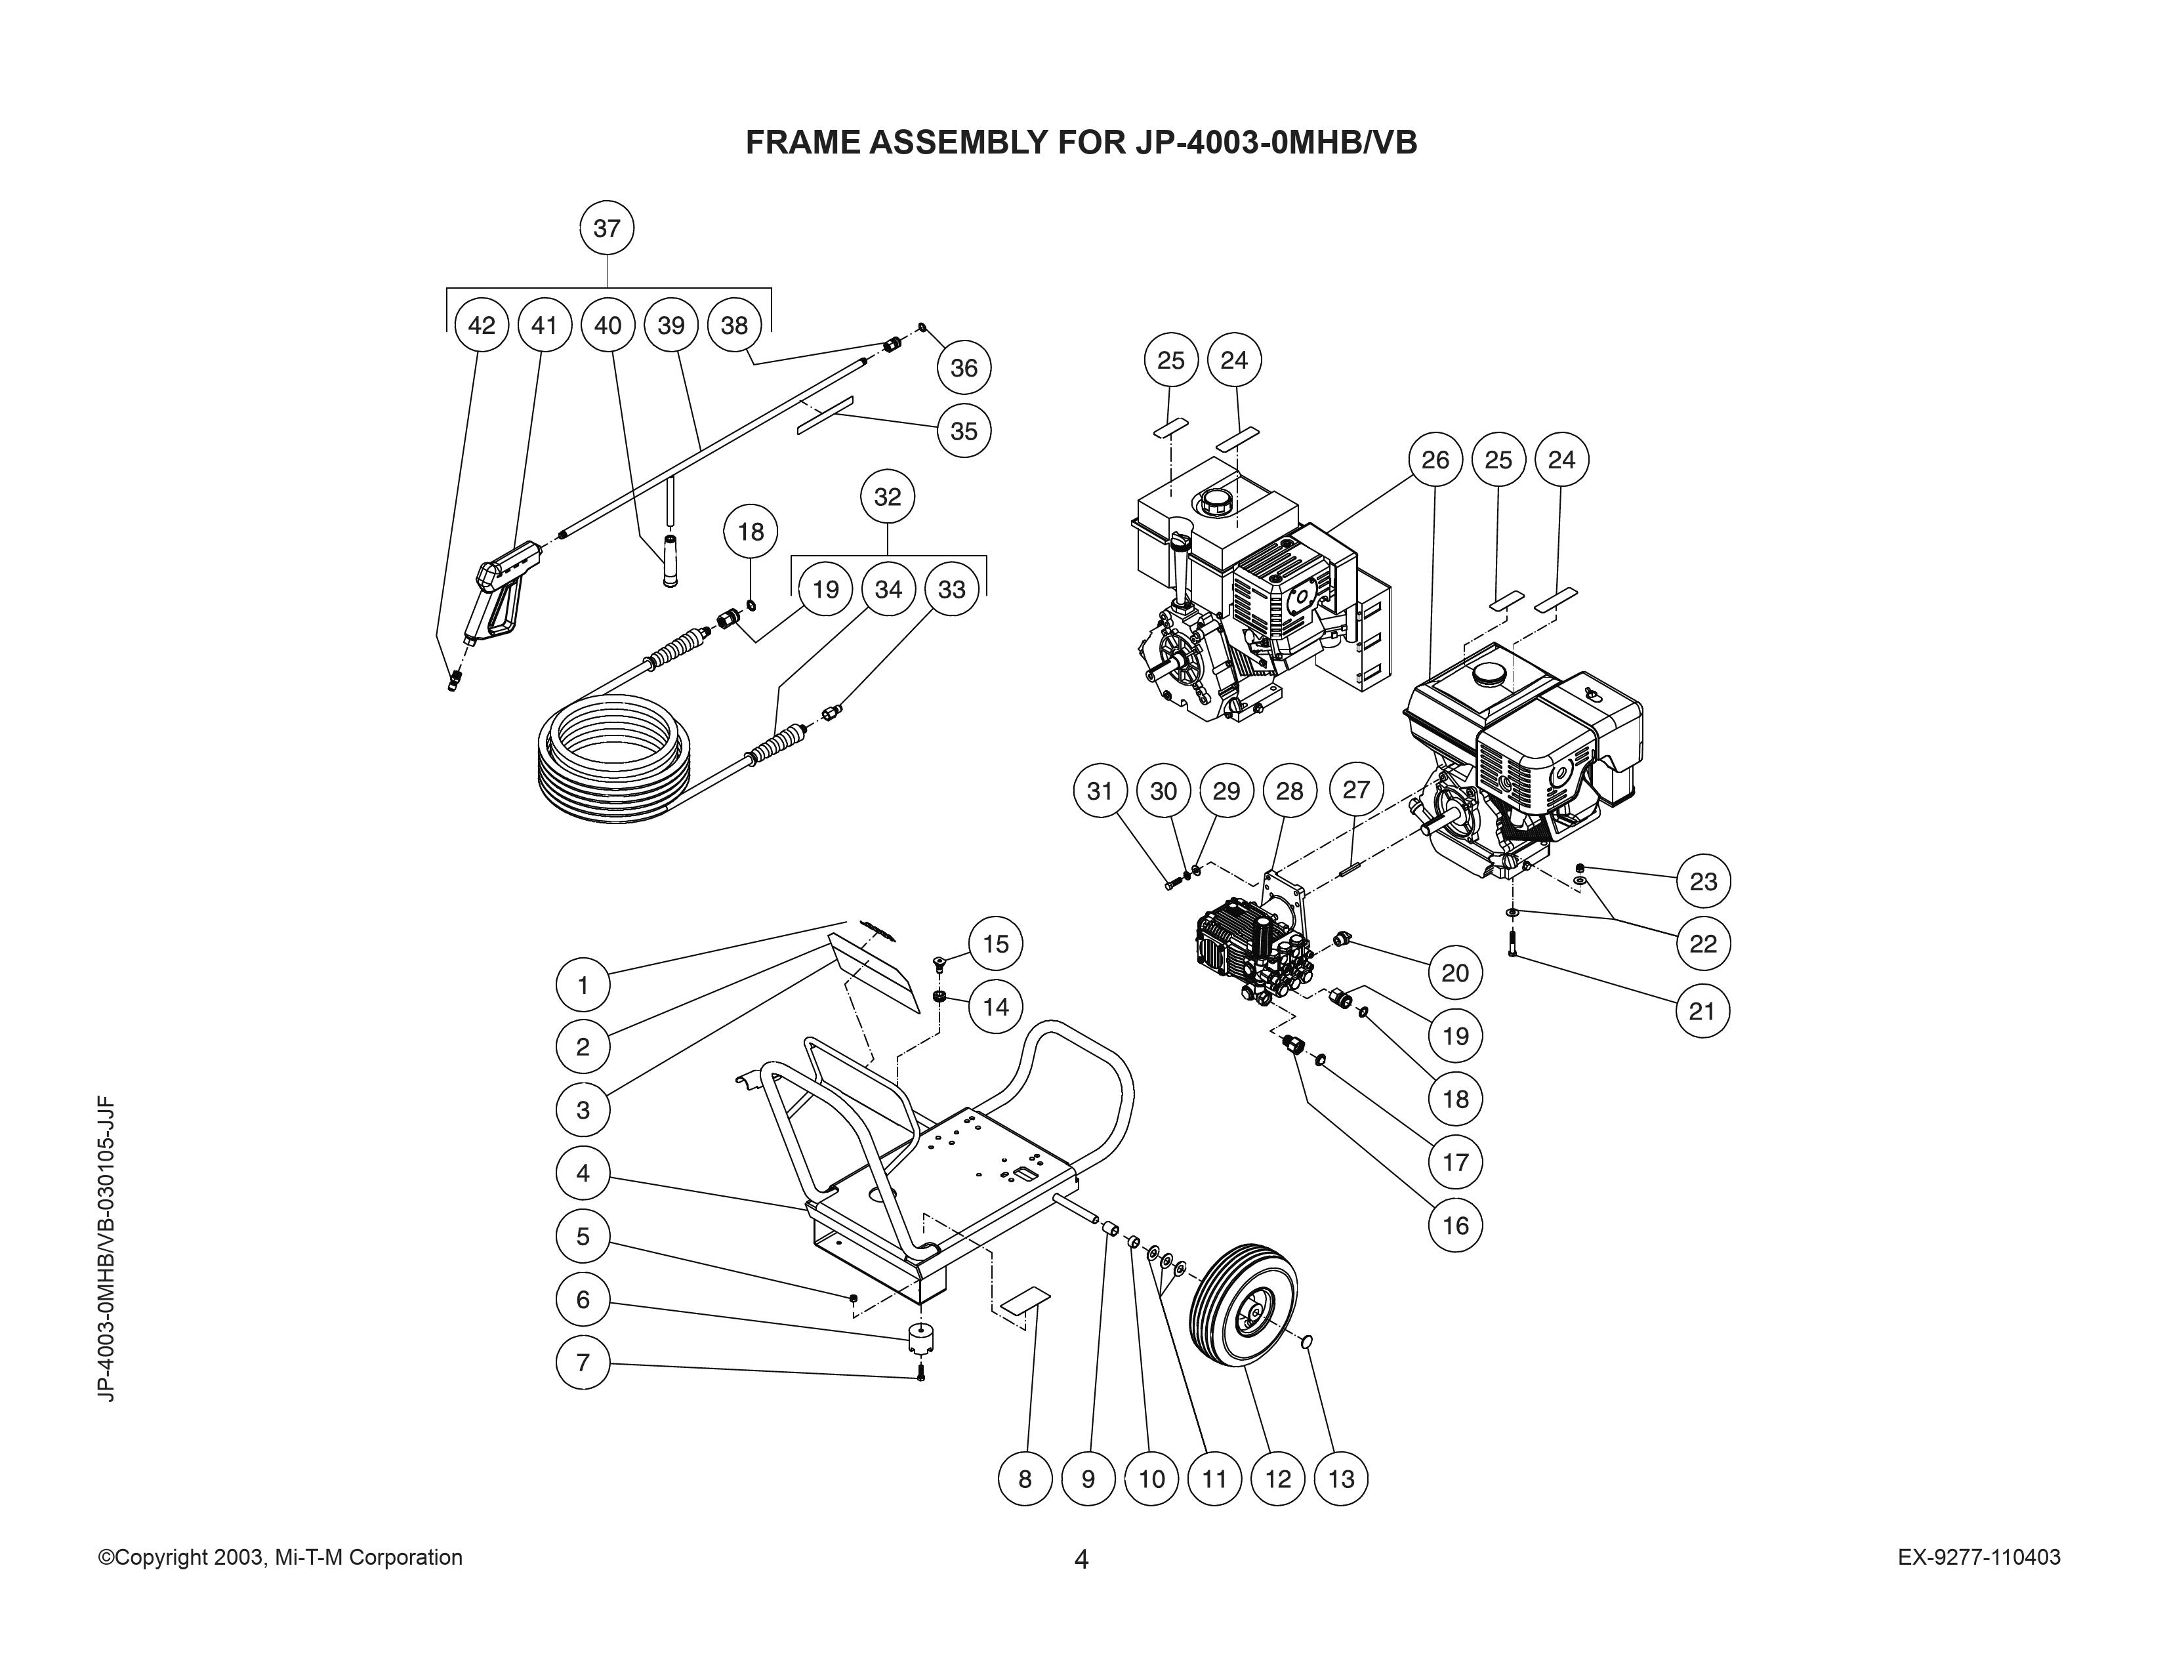 JP-4003-0MHB / VB Pressure Washer parts, repair kits, pumps, breakdowns & owners manual